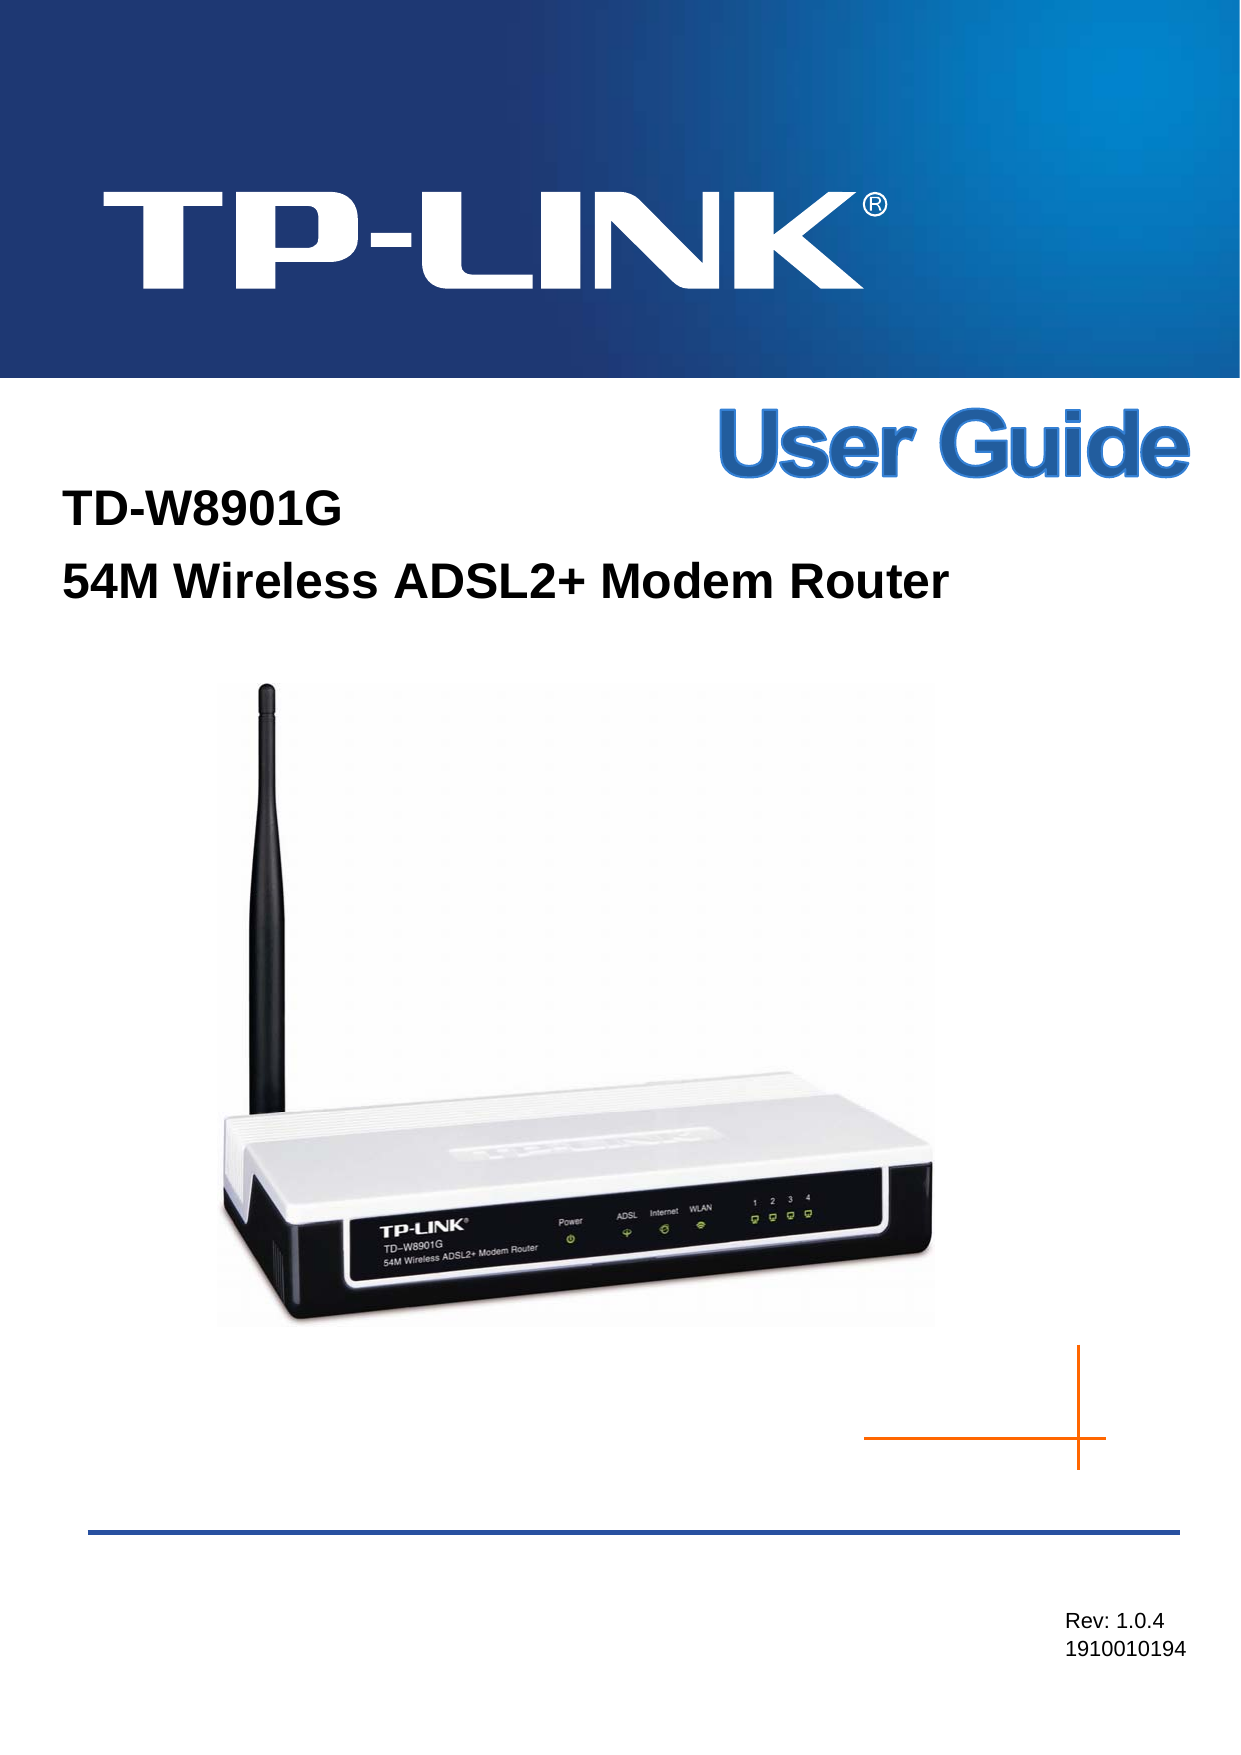    TD-W8901G 54M Wireless ADSL2+ Modem Router  Rev: 1.0.4 1910010194 